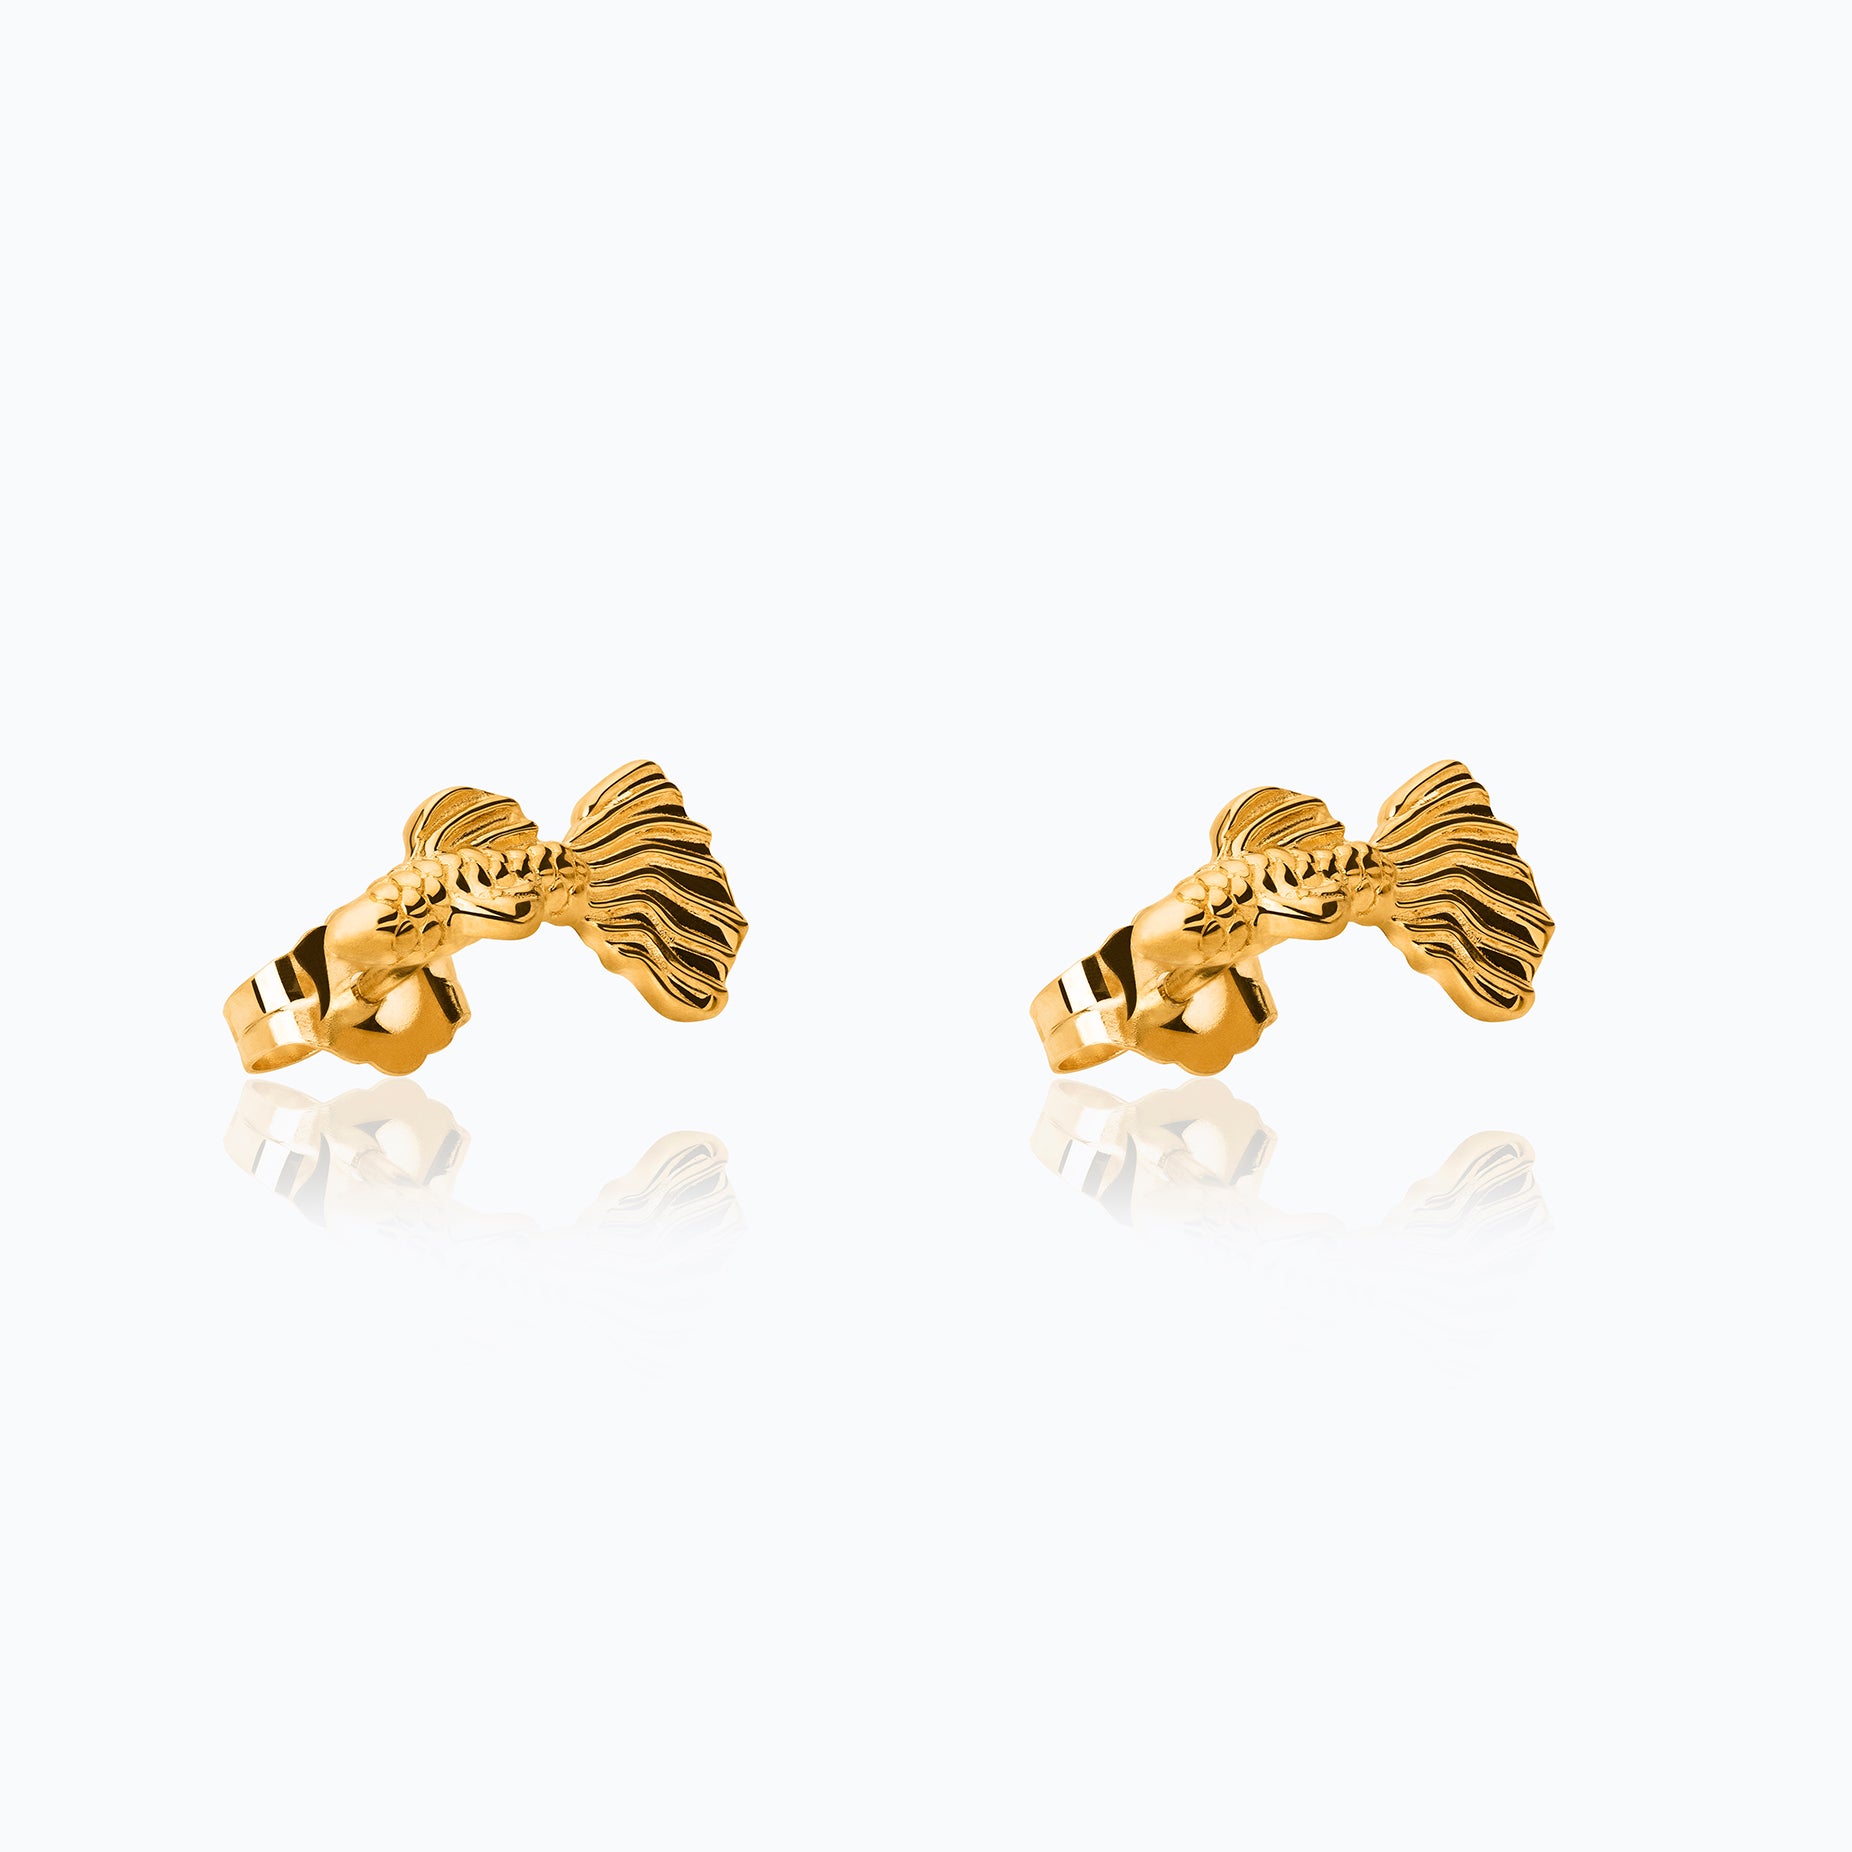 FISH GOLD EARRINGS